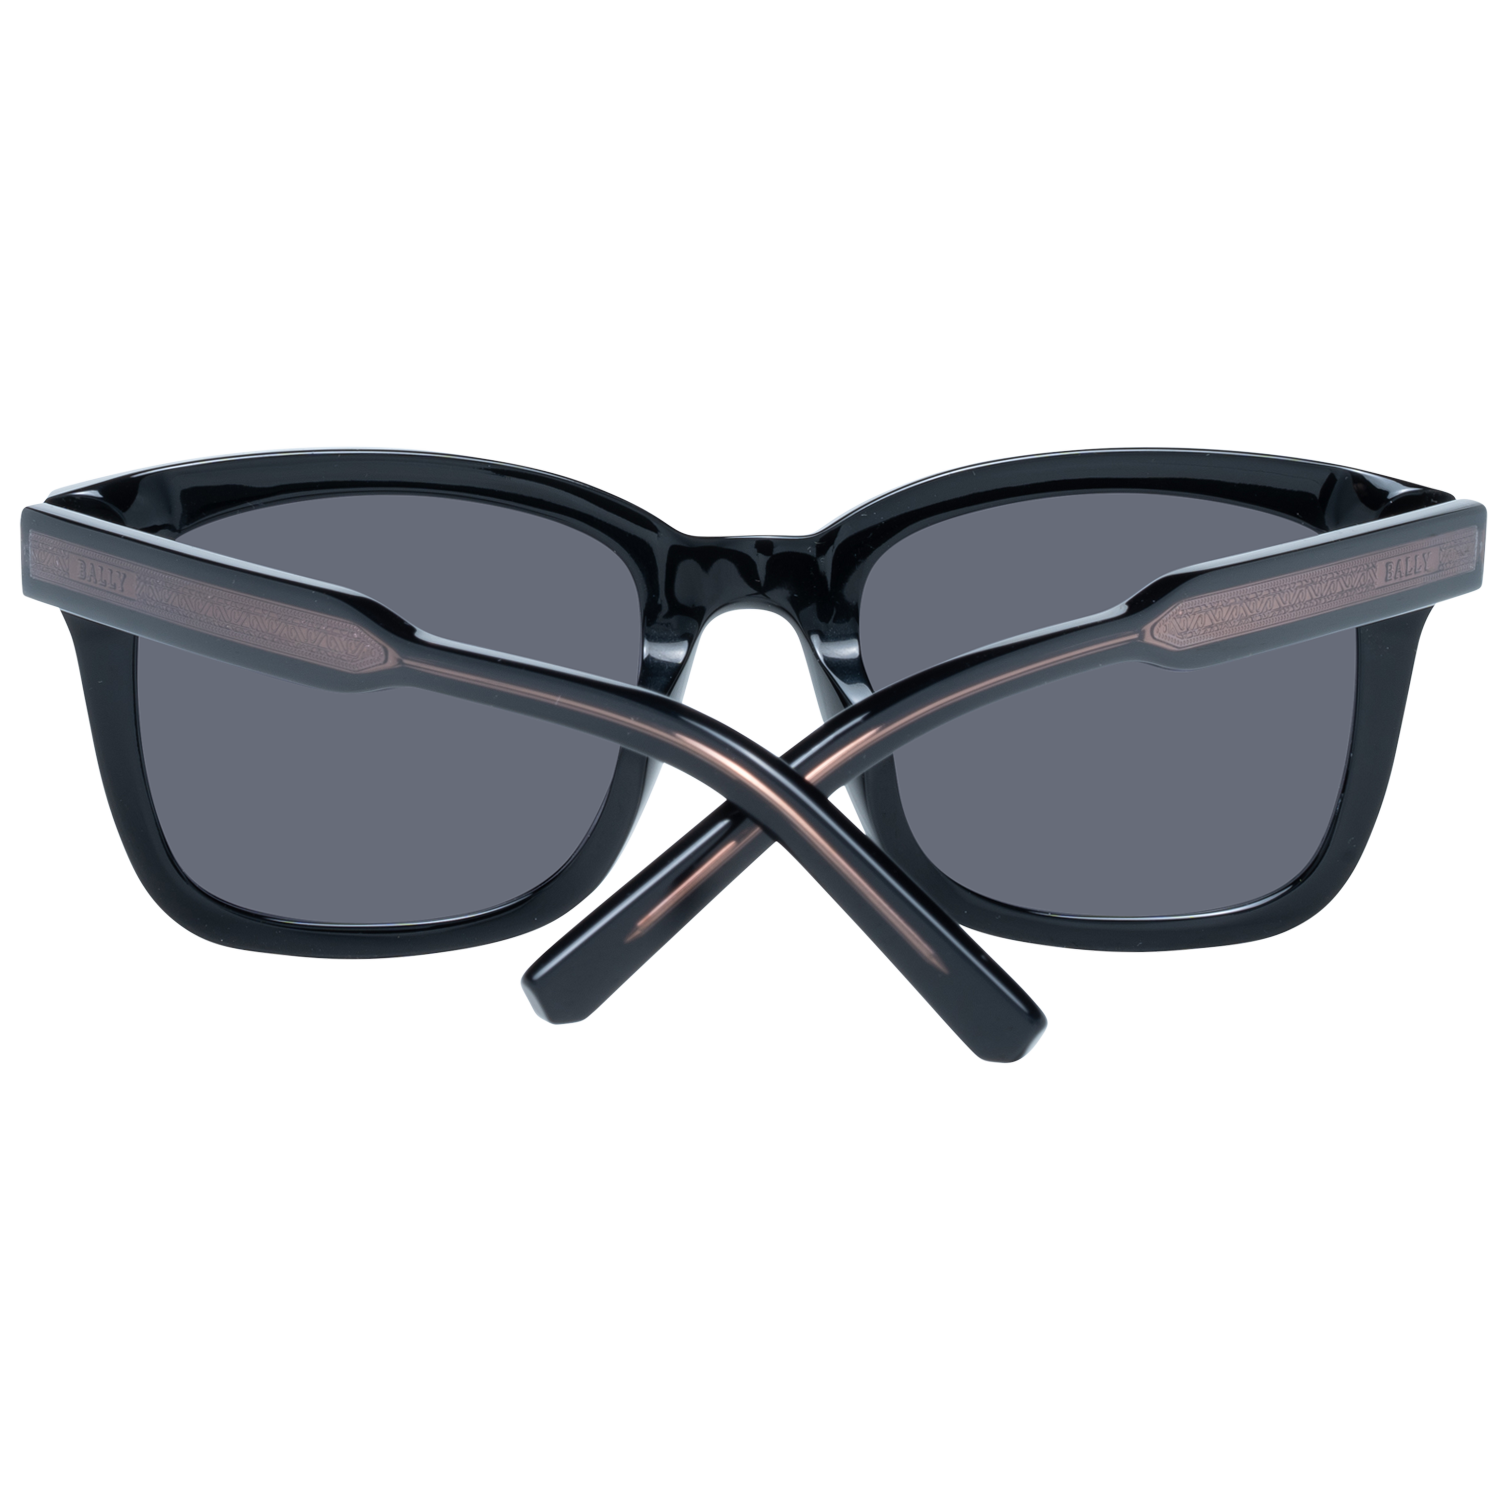 Bally Sunglasses Bally Sunglasses BY0045-K 01A 55 Eyeglasses Eyewear UK USA Australia 